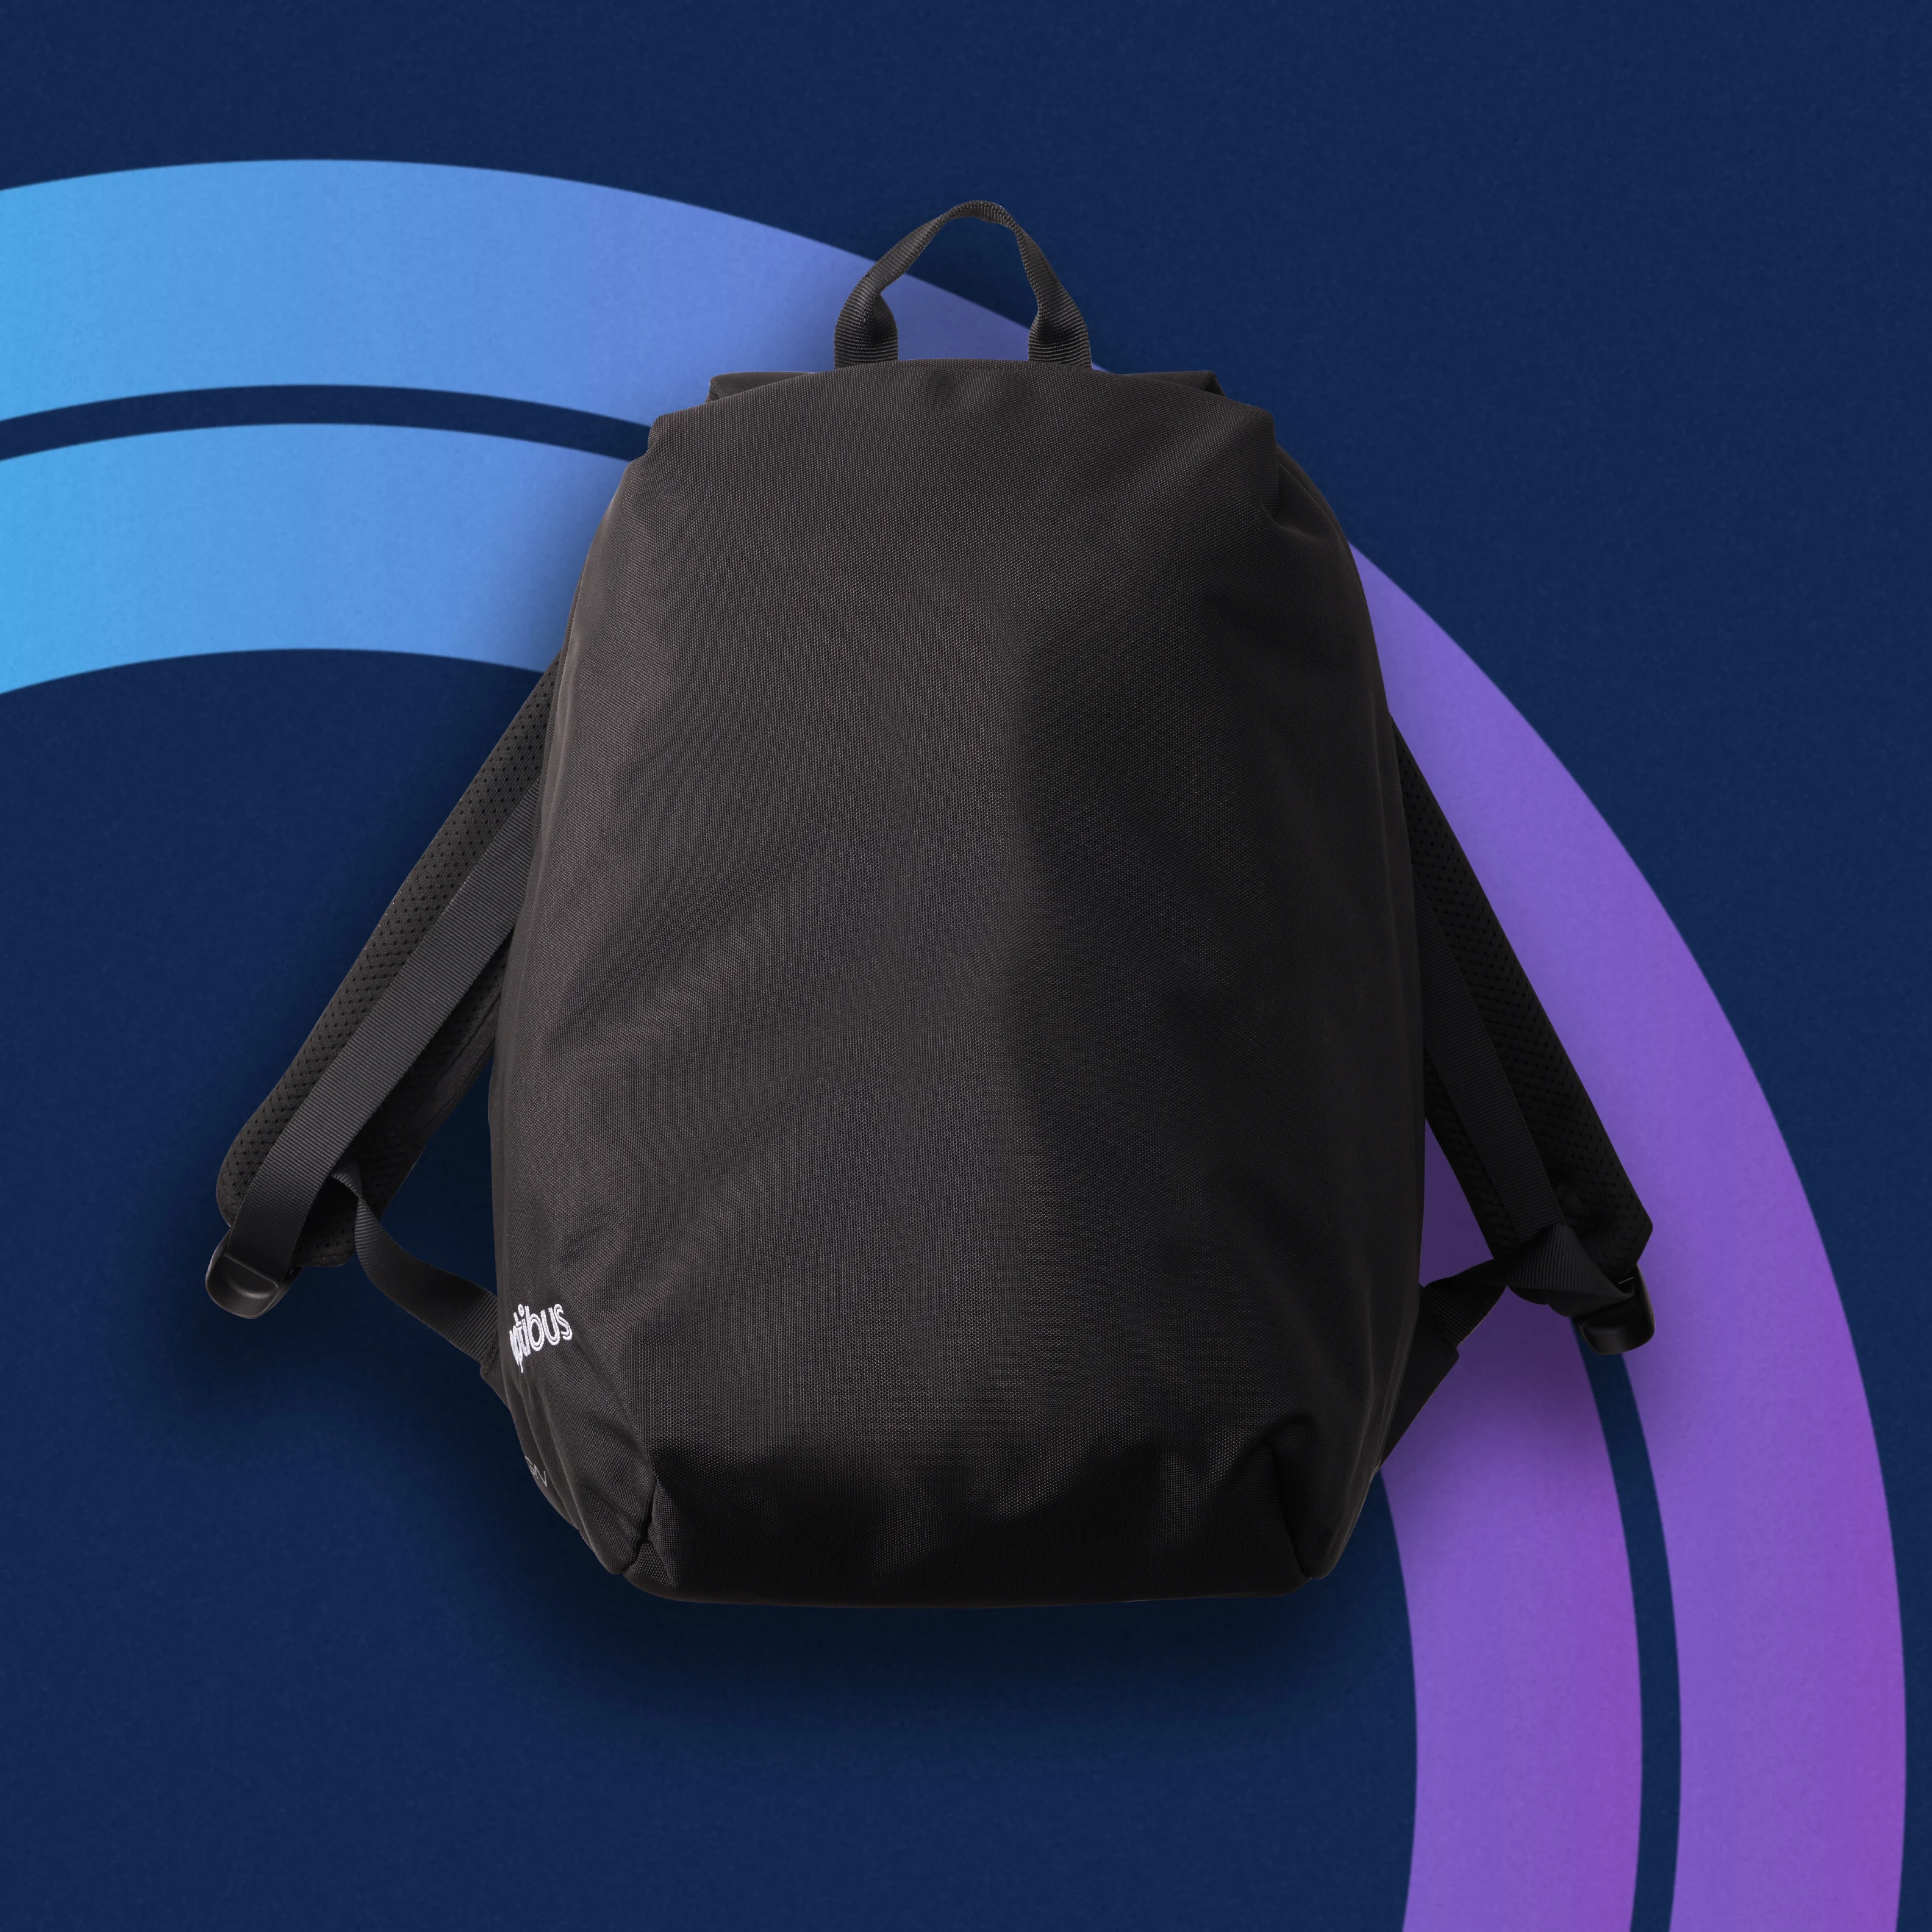 Optibus Go Swag Custom Branded Merchandise Welcome Pack Onboarding bag backpack travel commute